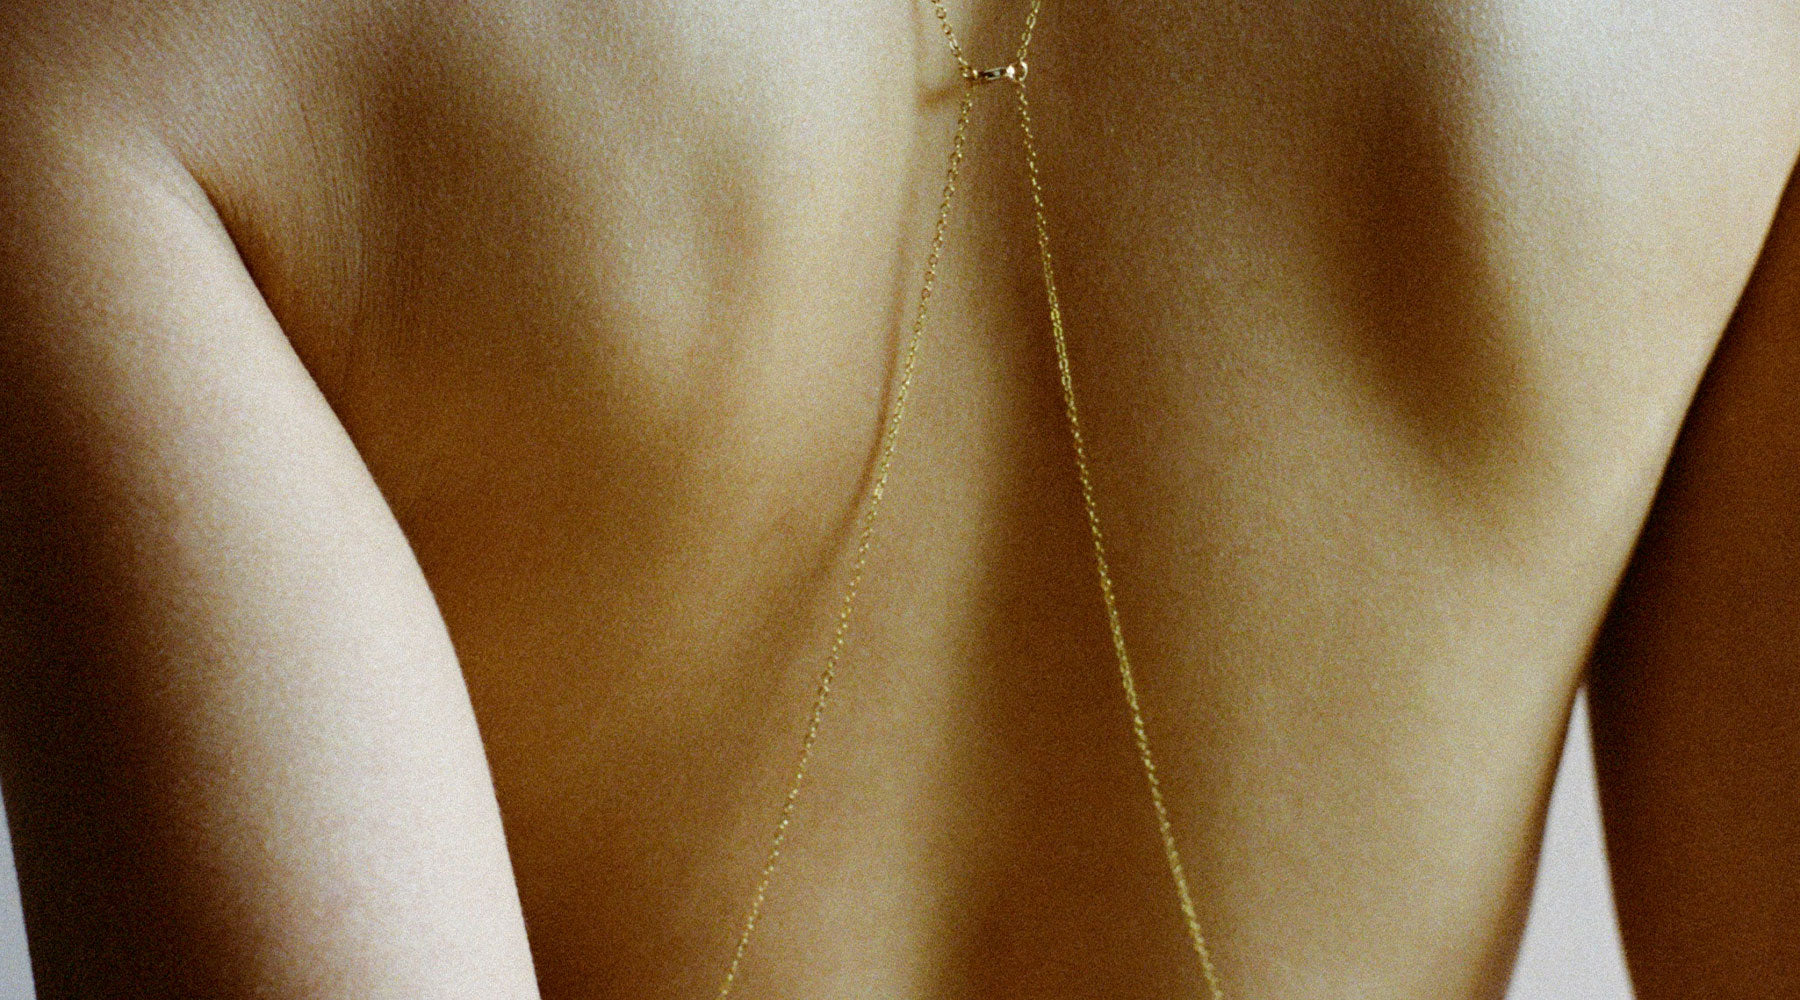 14k Gold Chain Bra, Chain Bralette, Chain Halter Top, Gypsy Bikini Top, Dainty Body Chain, 14k Gold Filled Tankini